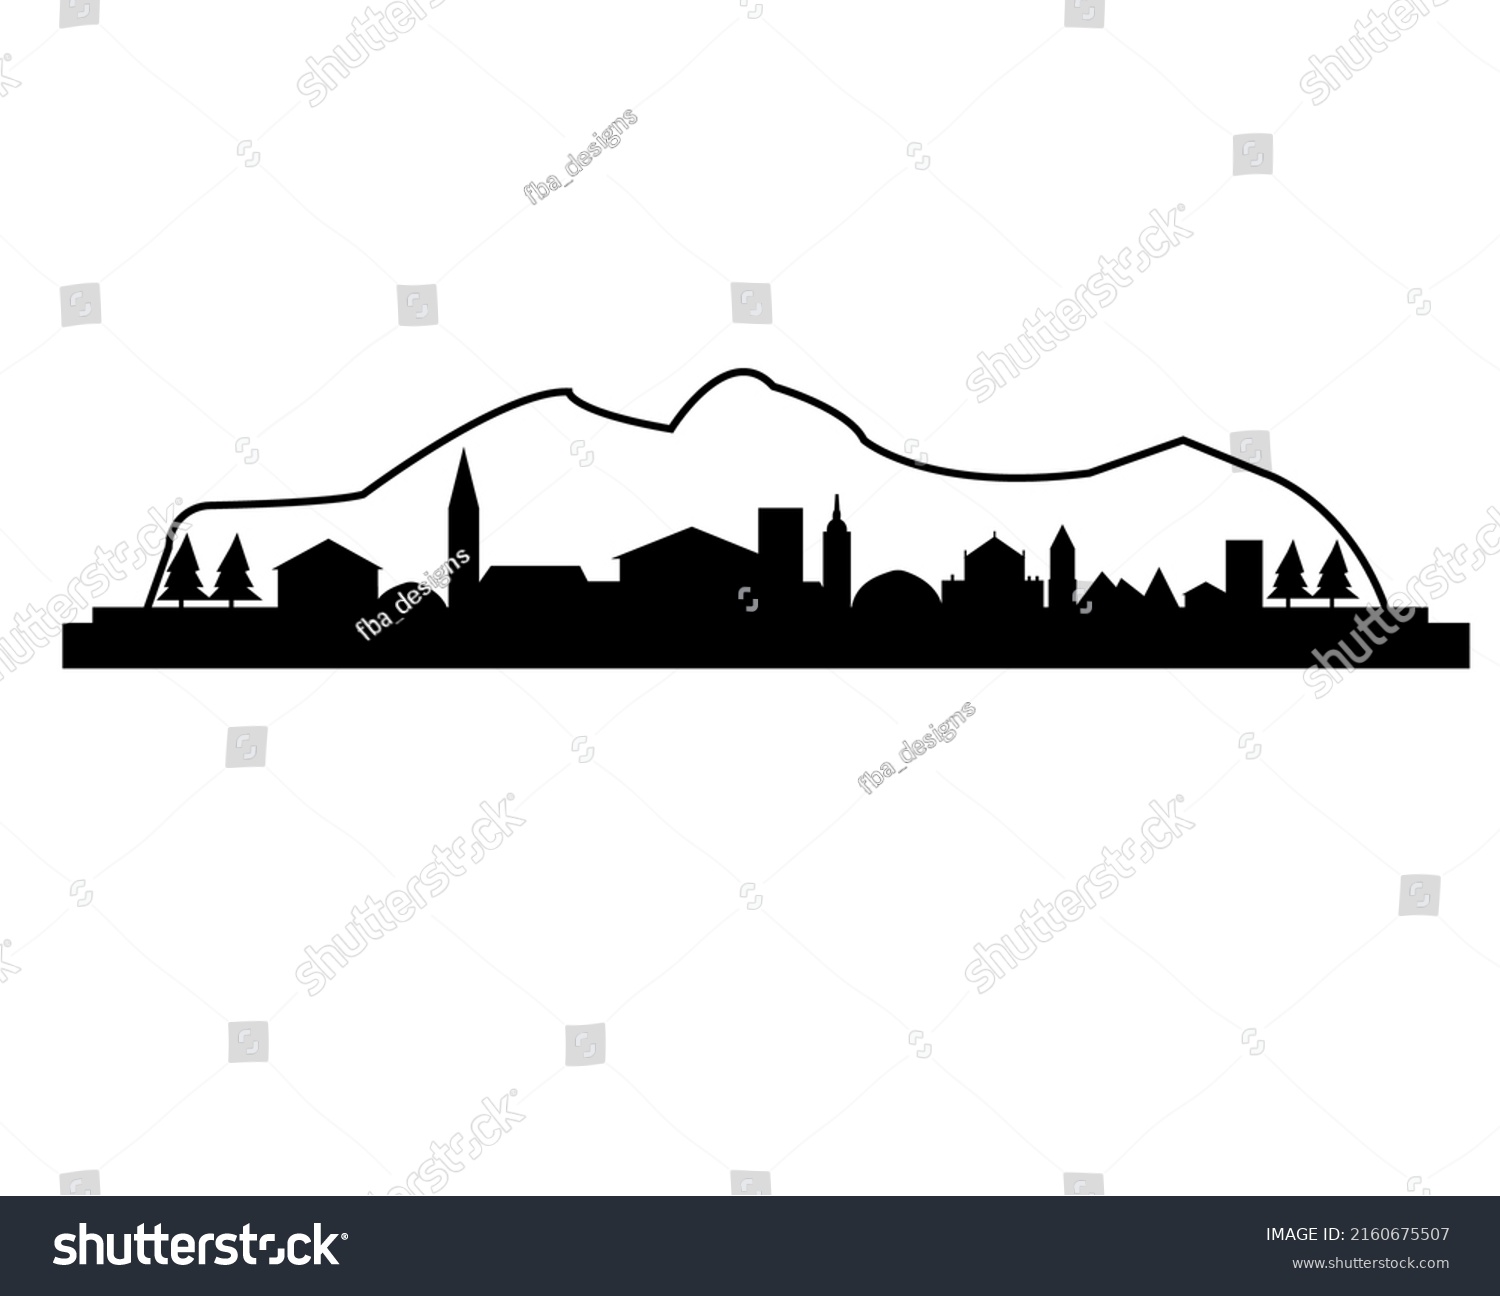 SVG of City Skyline silhouette of Davos, Switzerland svg